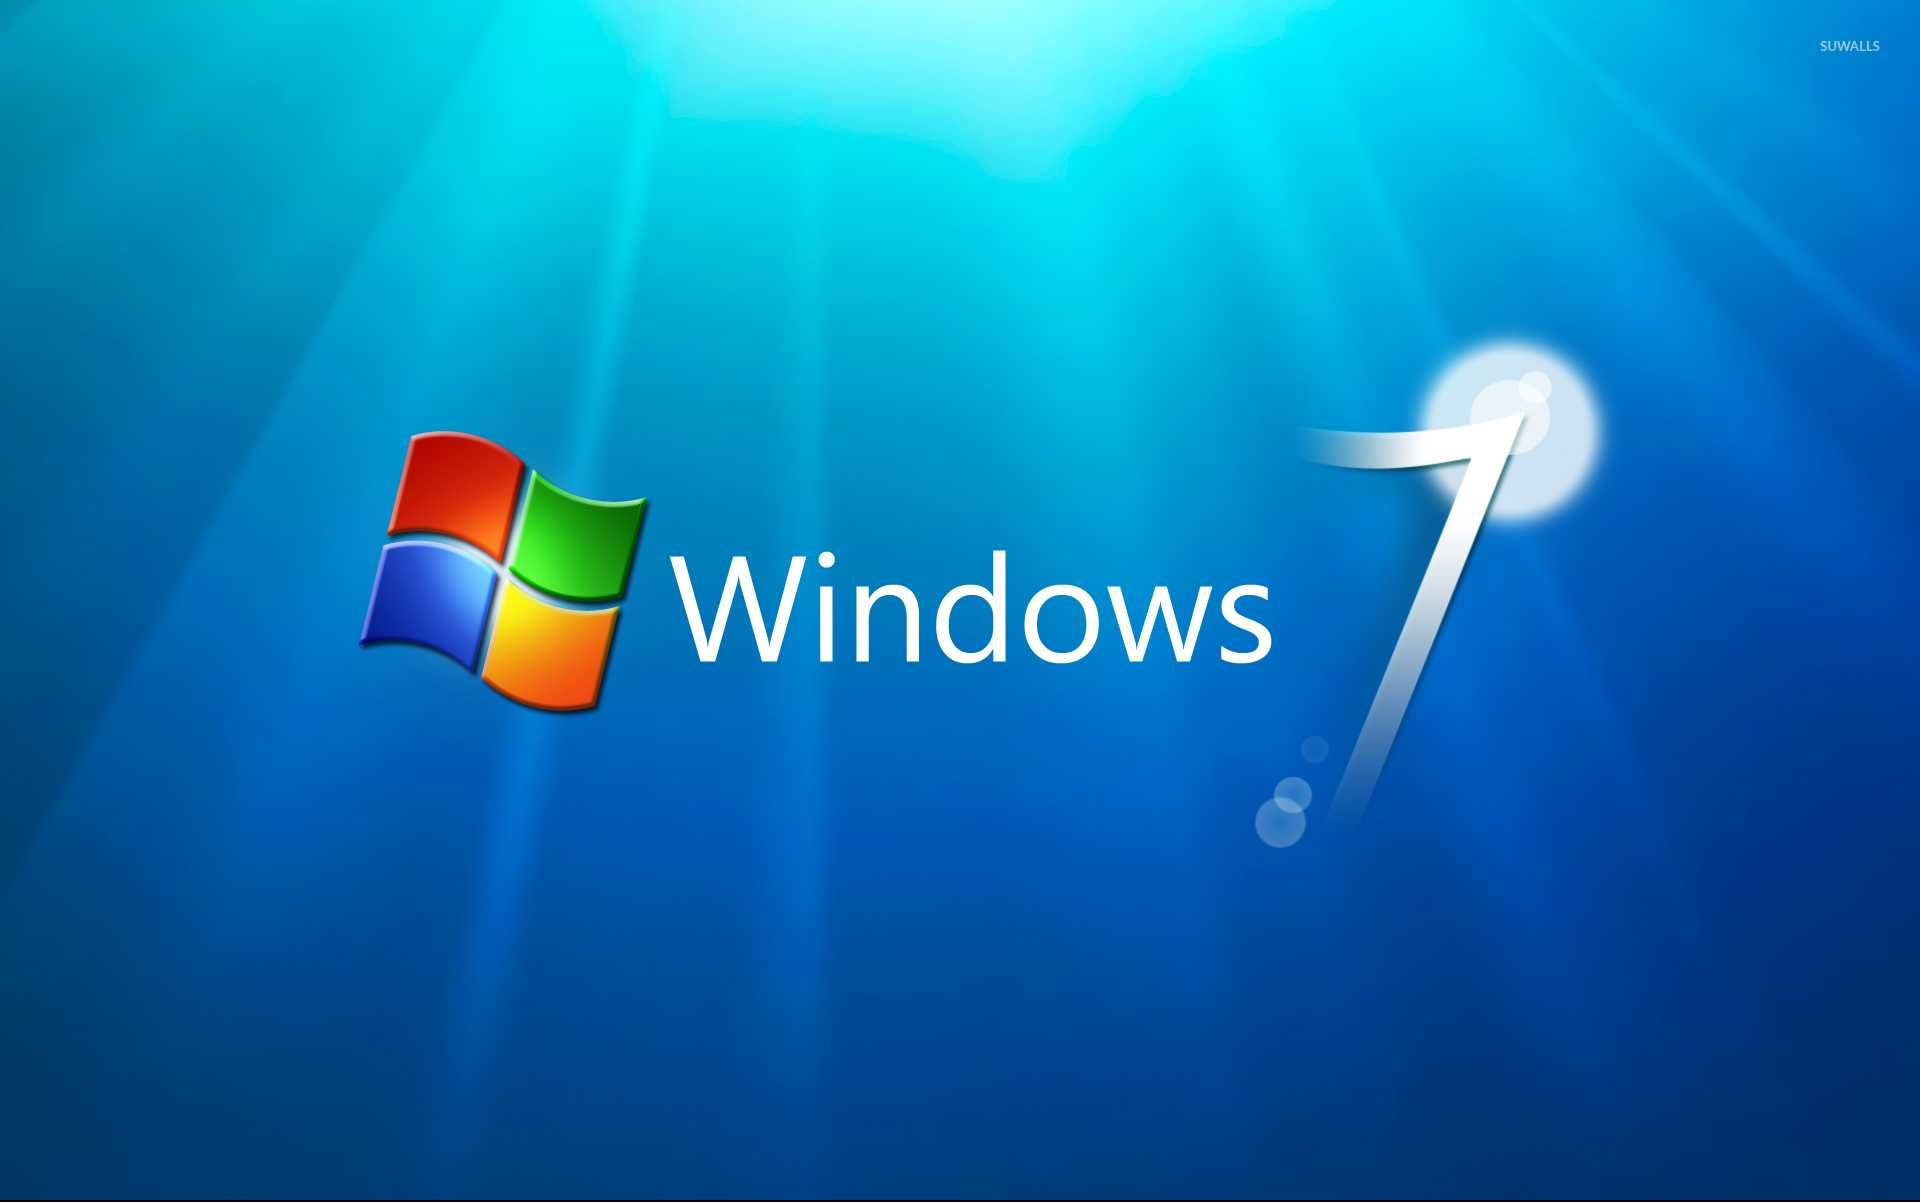 Сборки вин 7. Виндовс. Windows 7. Windows 7 фото. Обои Windows 7.